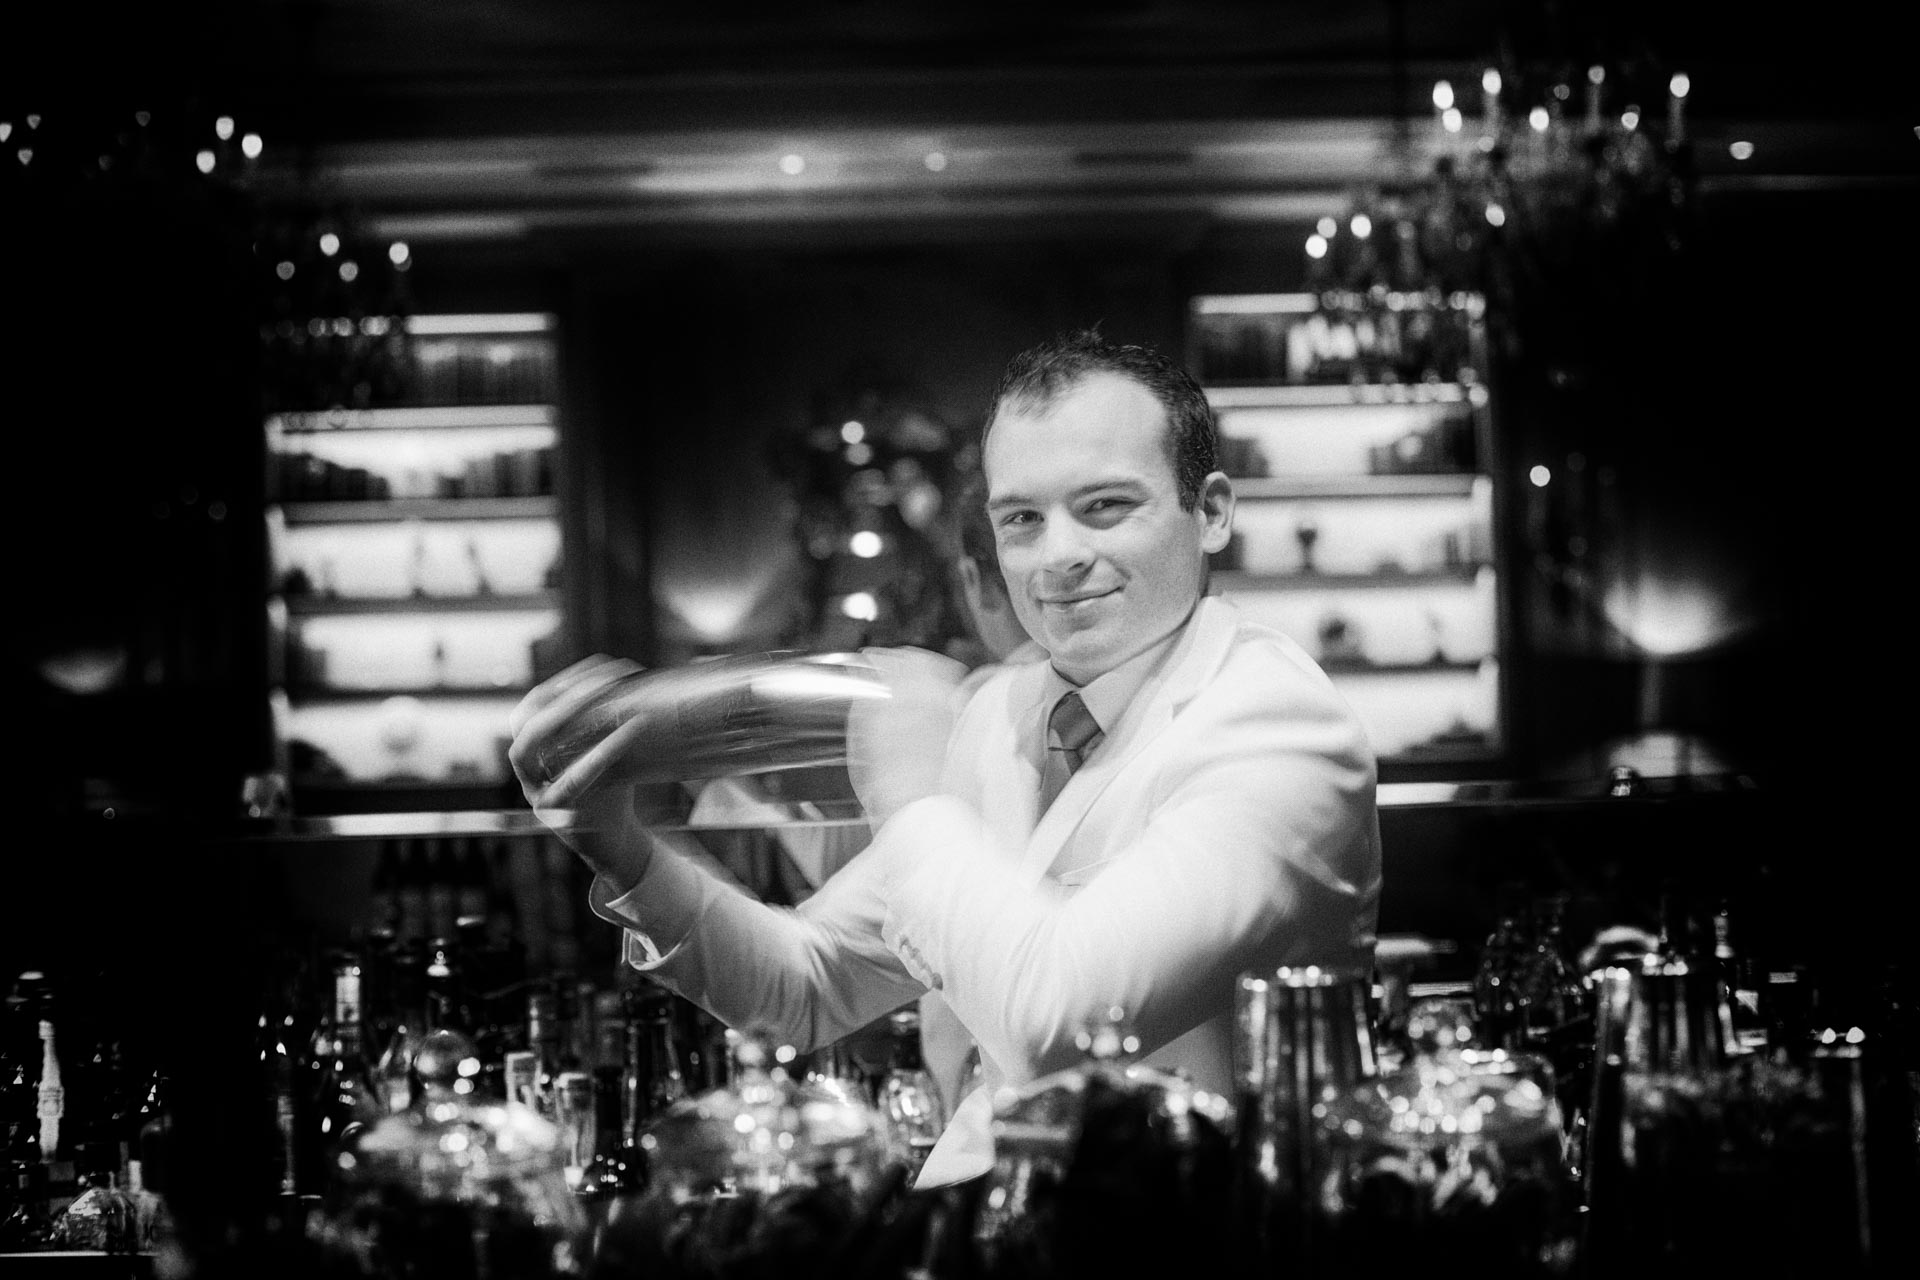 Bartender at Hotel Le Bristol Paris